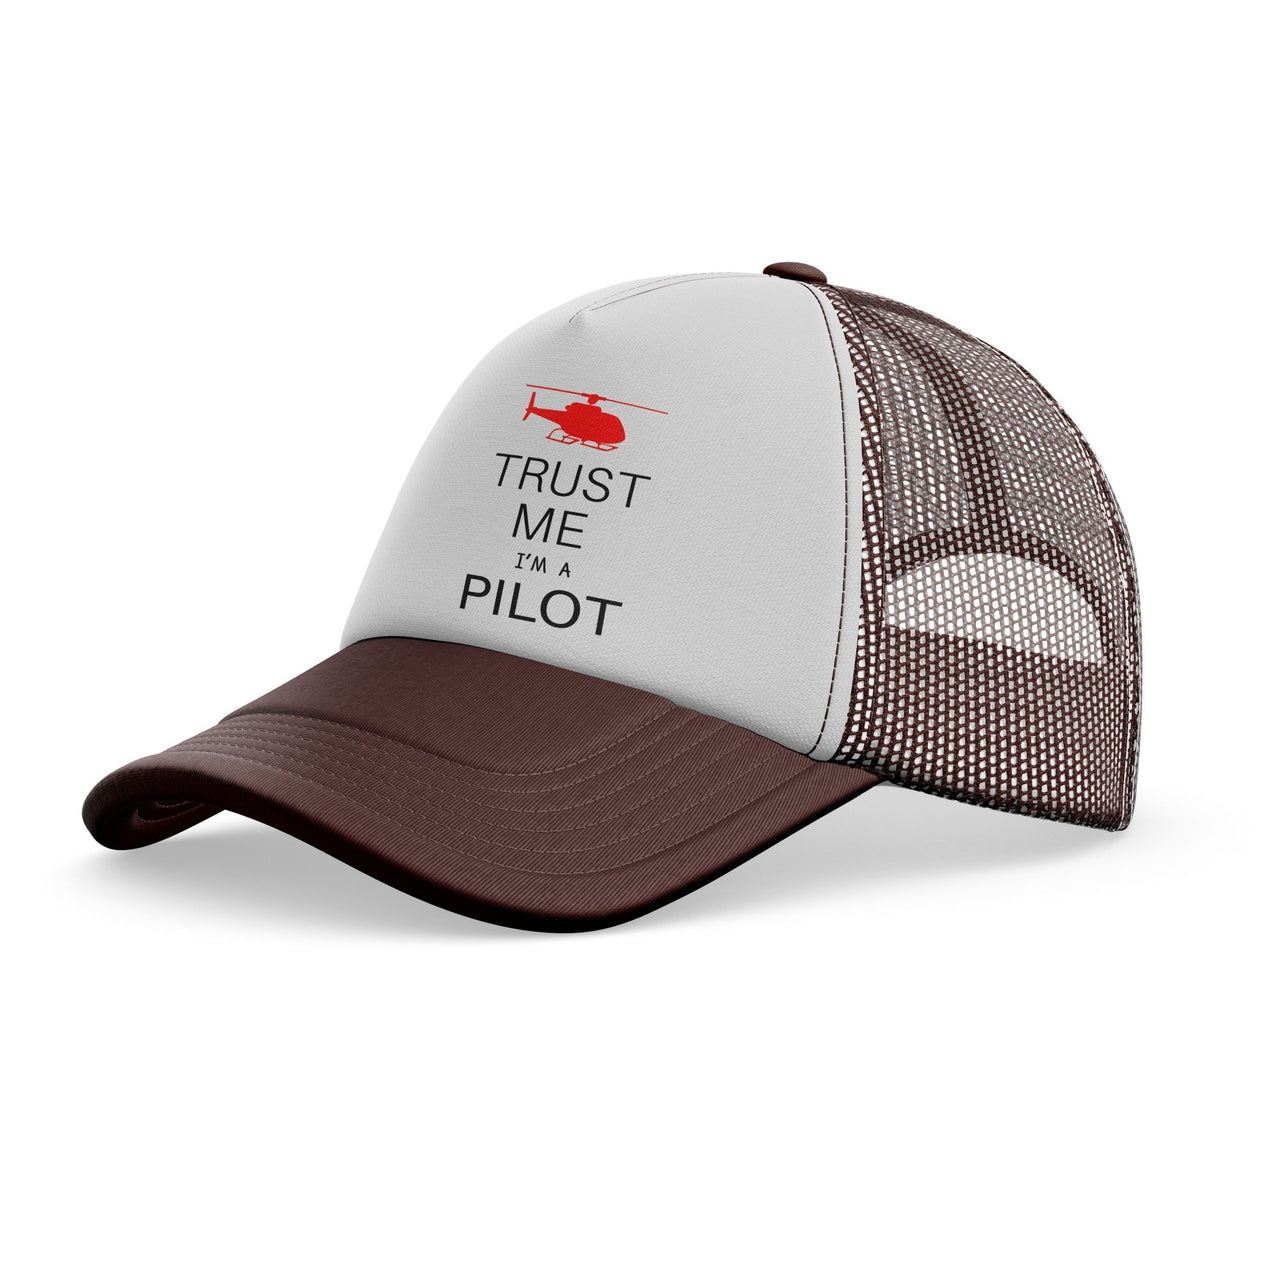 Trust Me I'm a Pilot (Helicopter) Designed Trucker Caps & Hats